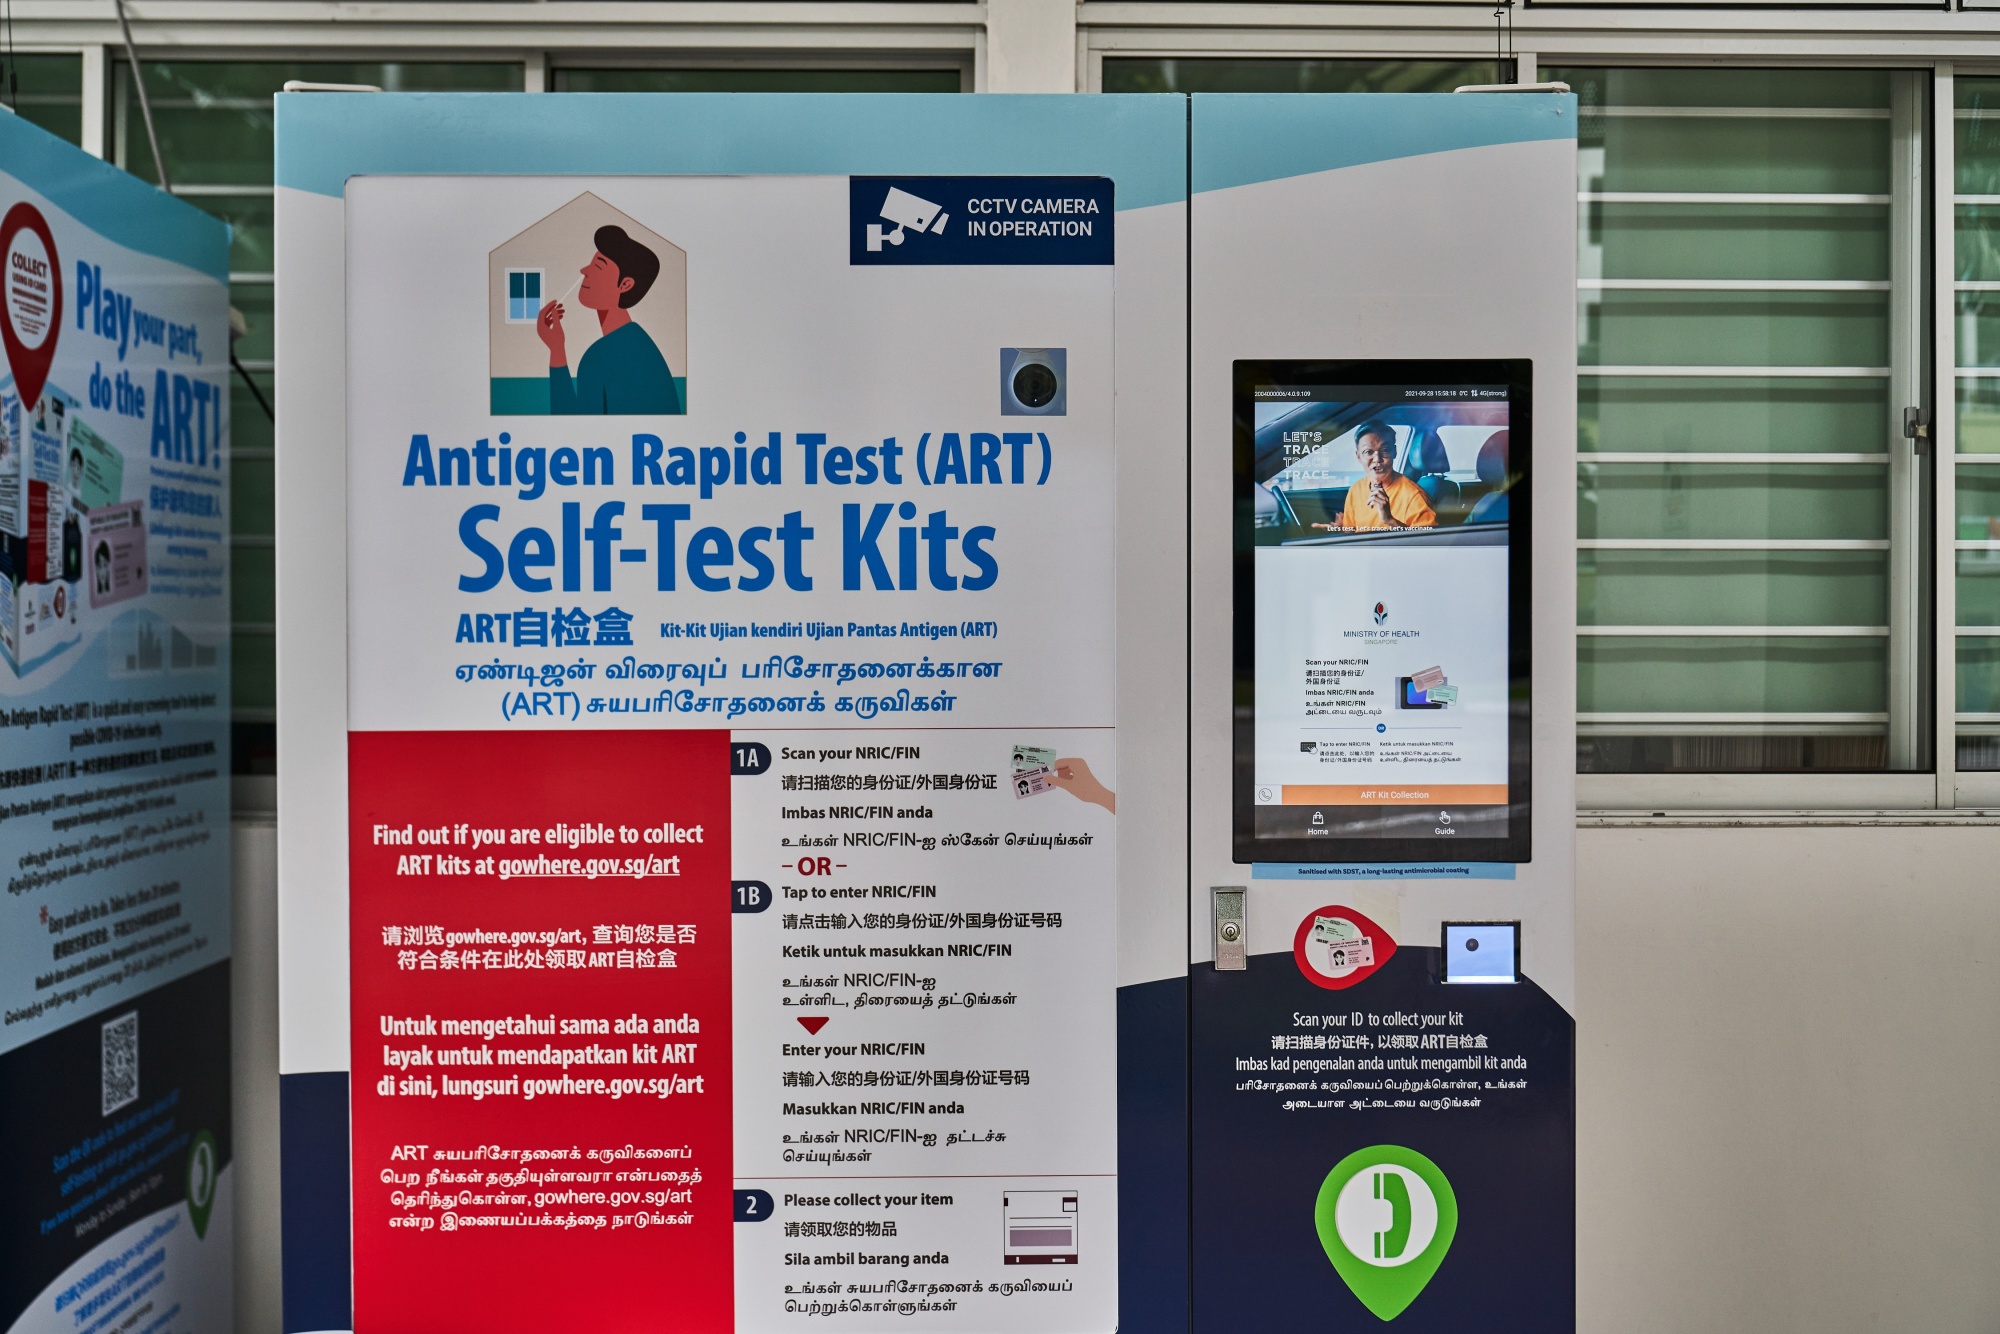 An Antigen Rapid Testing (ART) Self-Test Kits vending machine in Singapore.